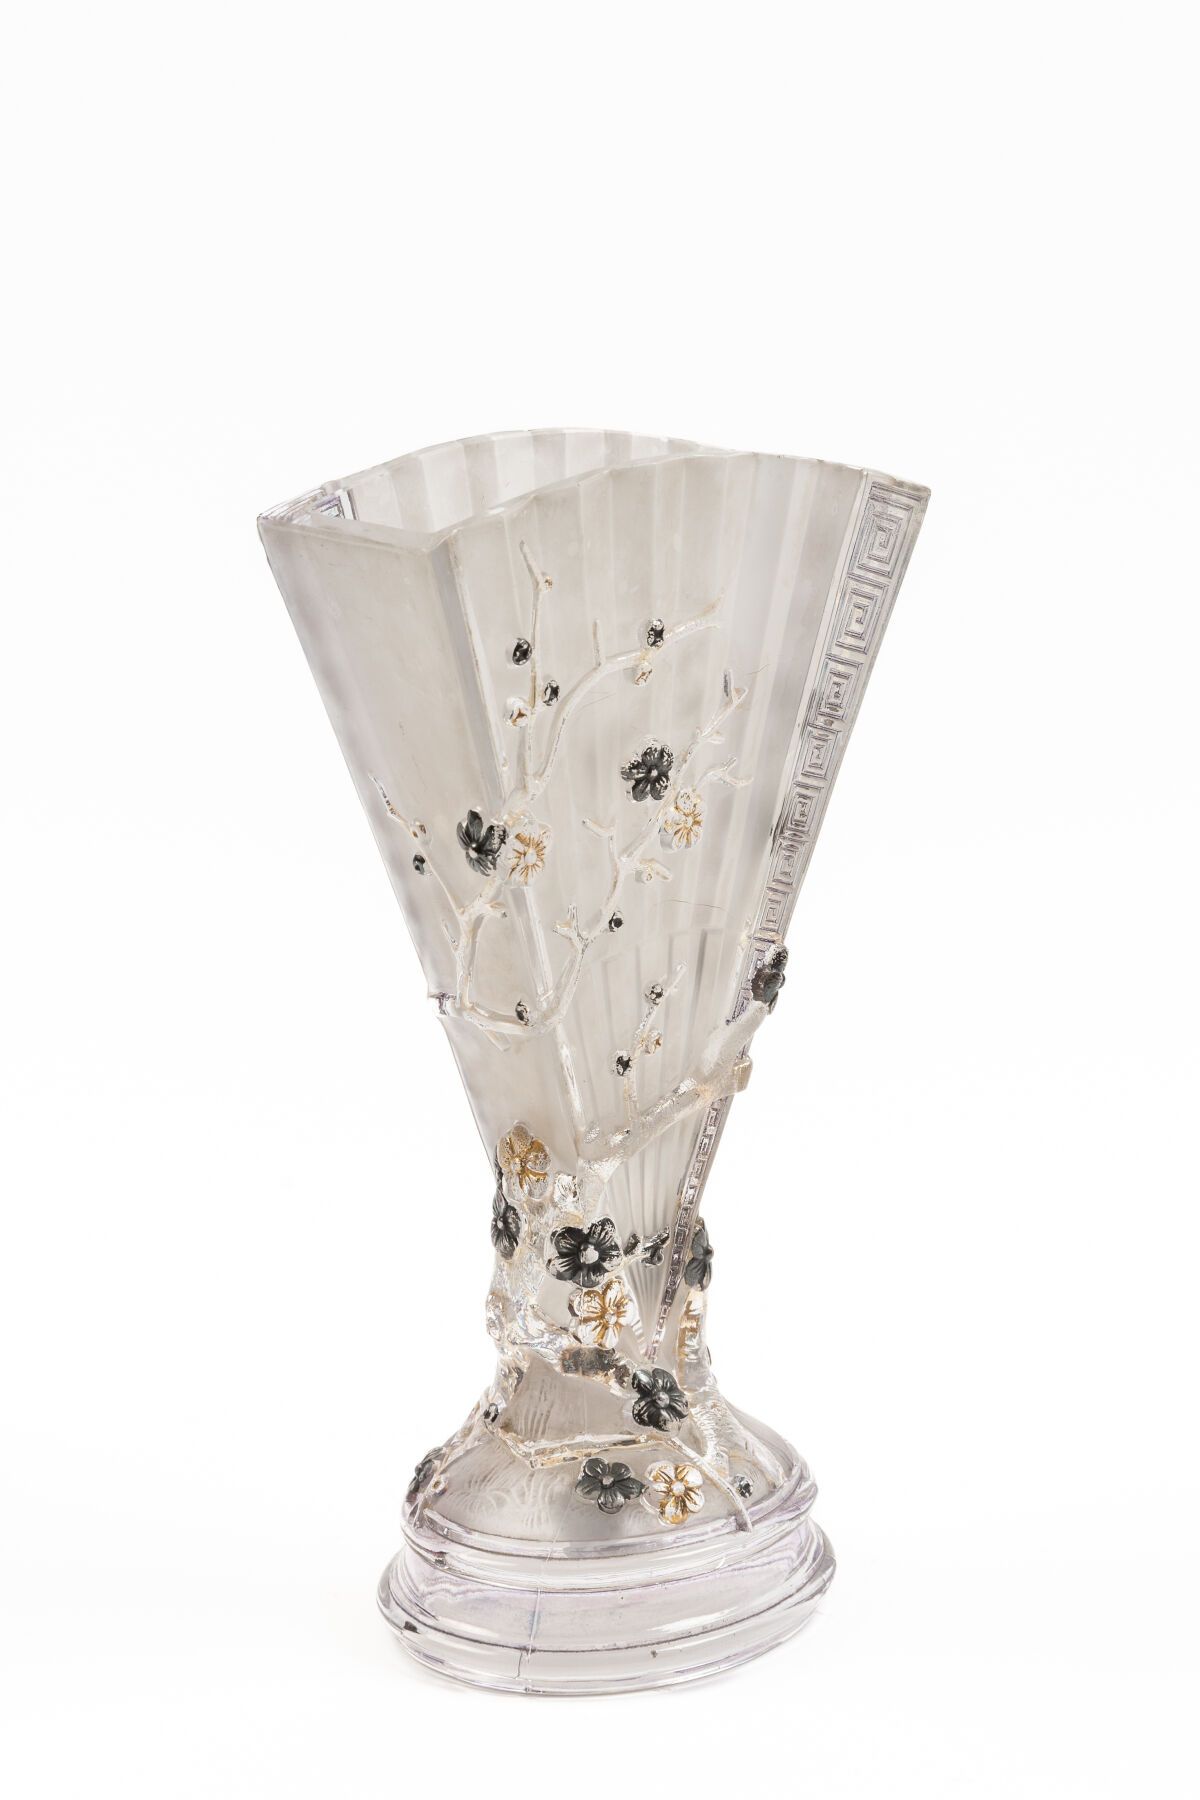 Null BACCARAT。

一个部分磨砂的模制水晶花瓶，上面有日本的扇子和梅花枝的装饰。

鲜花装饰着黑色和金色的亮点。

大约1900年。

无符号。

&hellip;